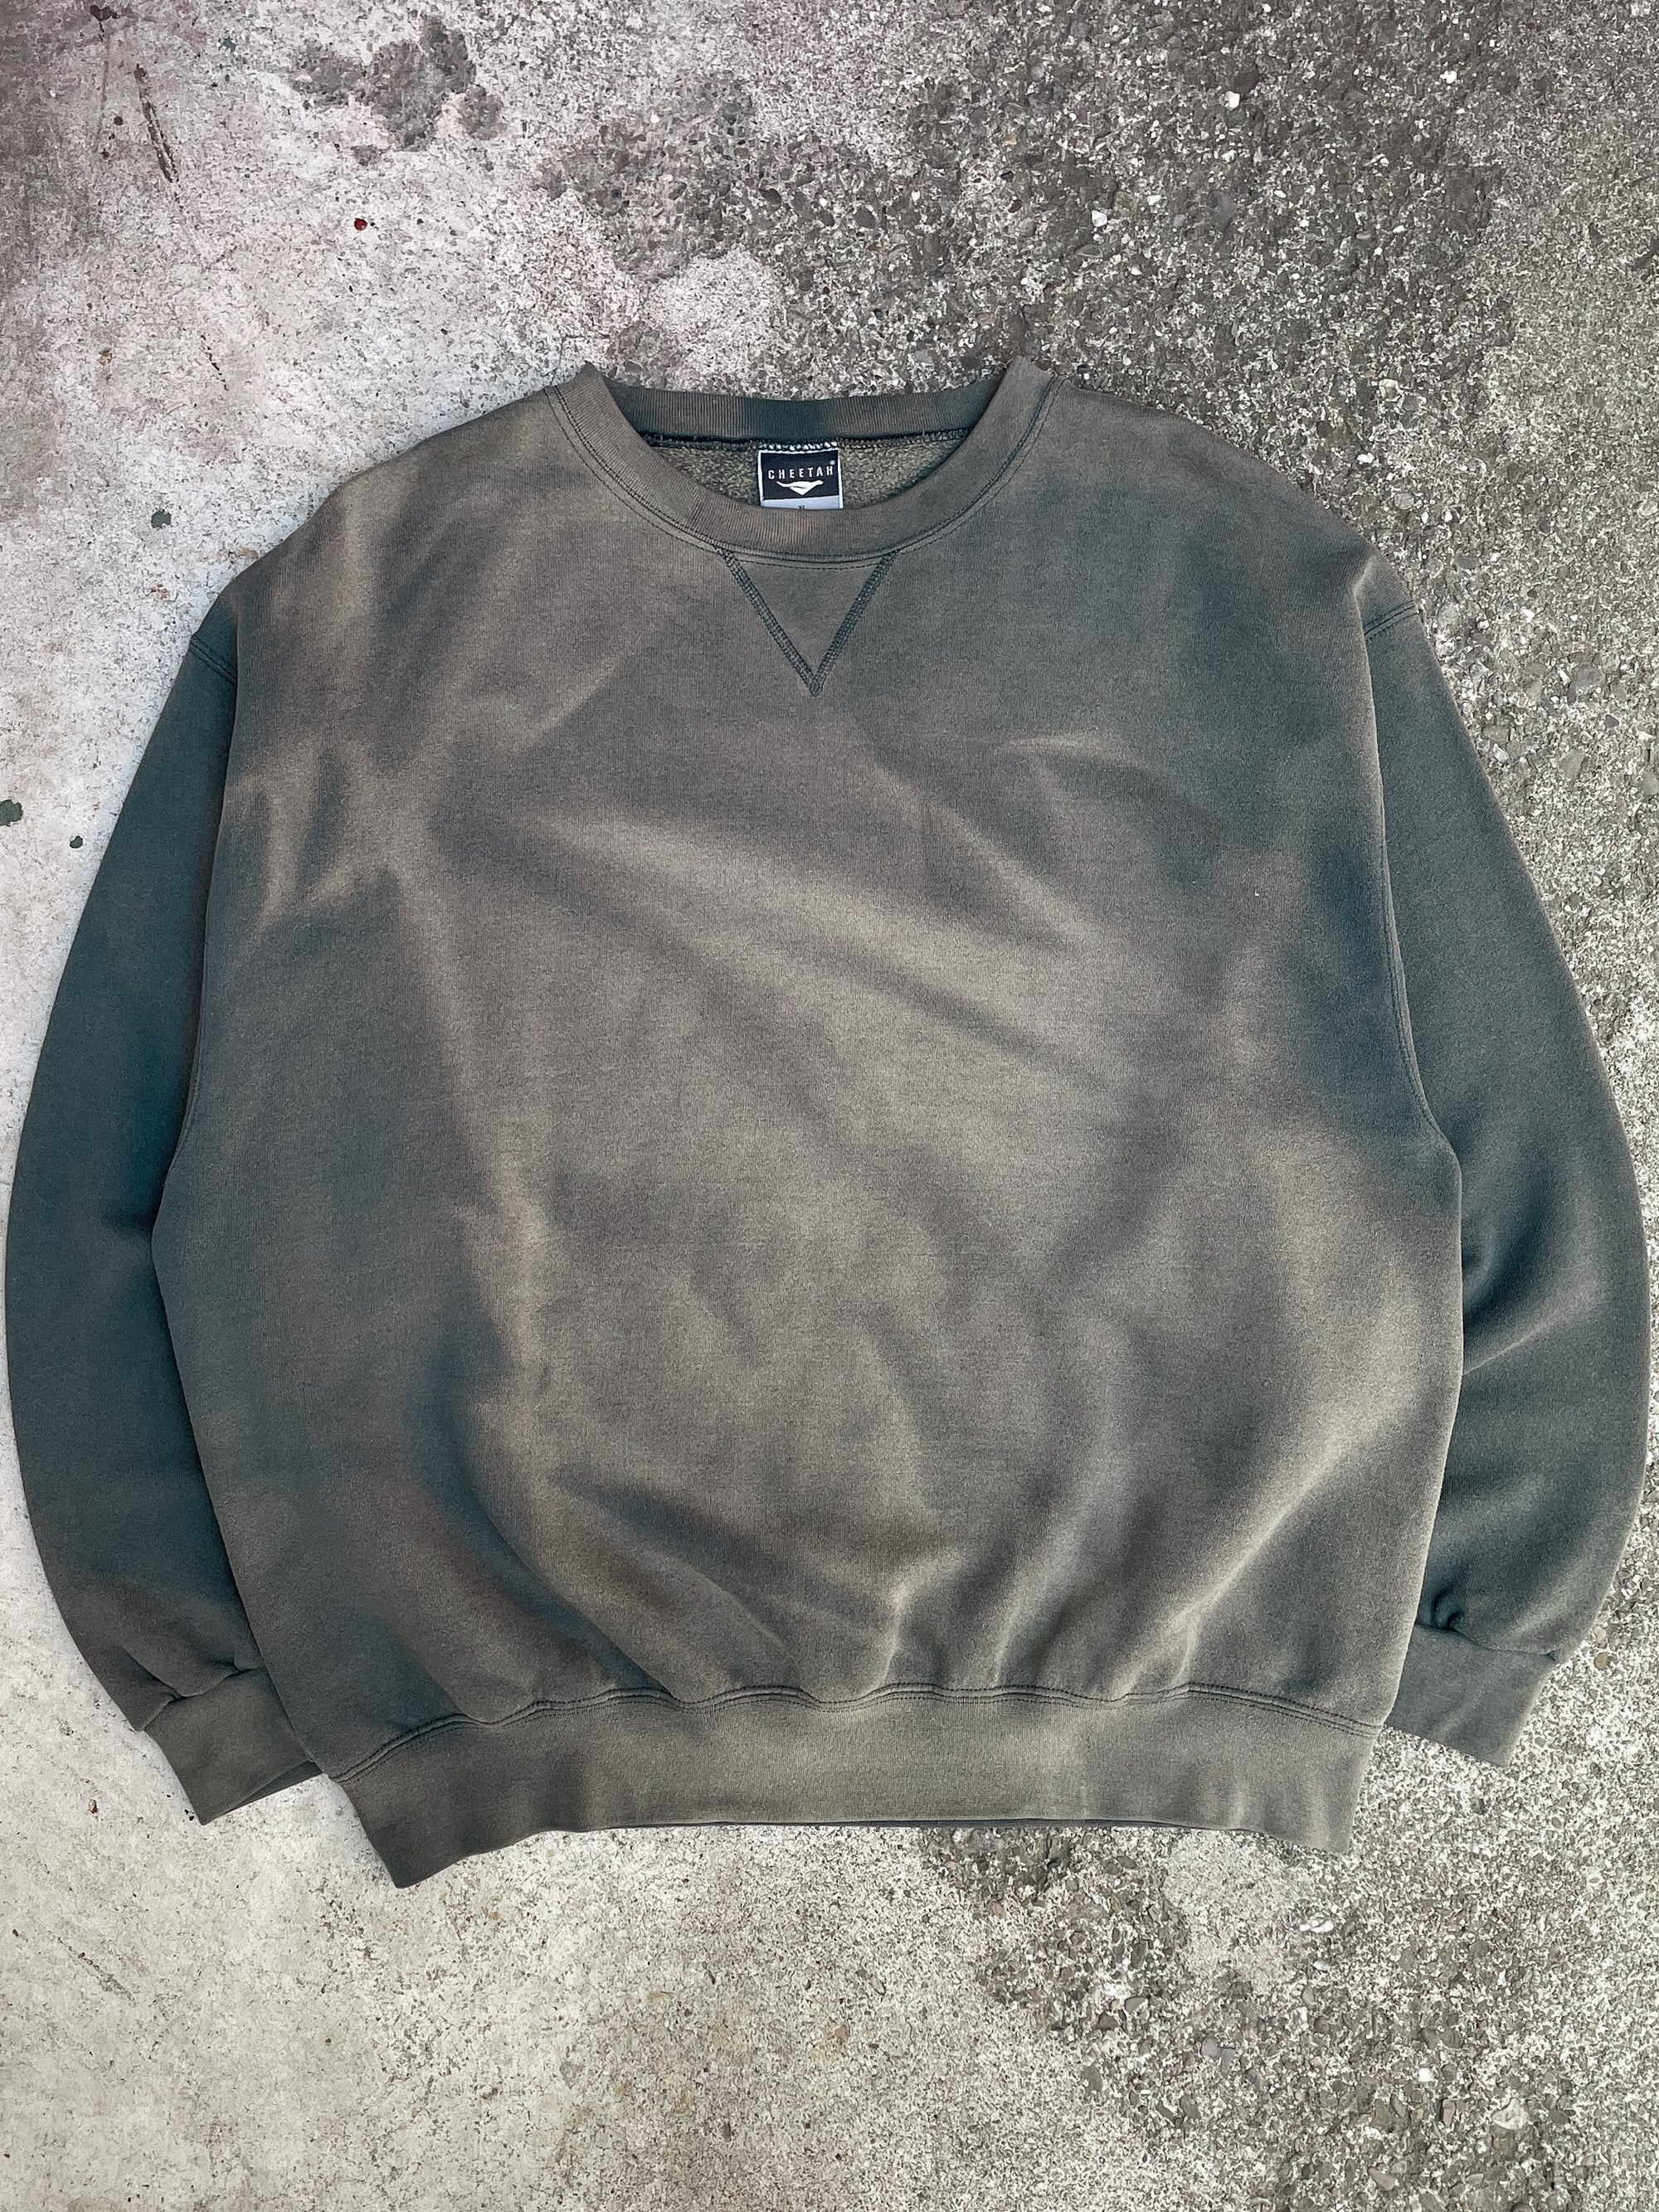 1990s Sun Faded Green Blank Sweatshirt (XL)